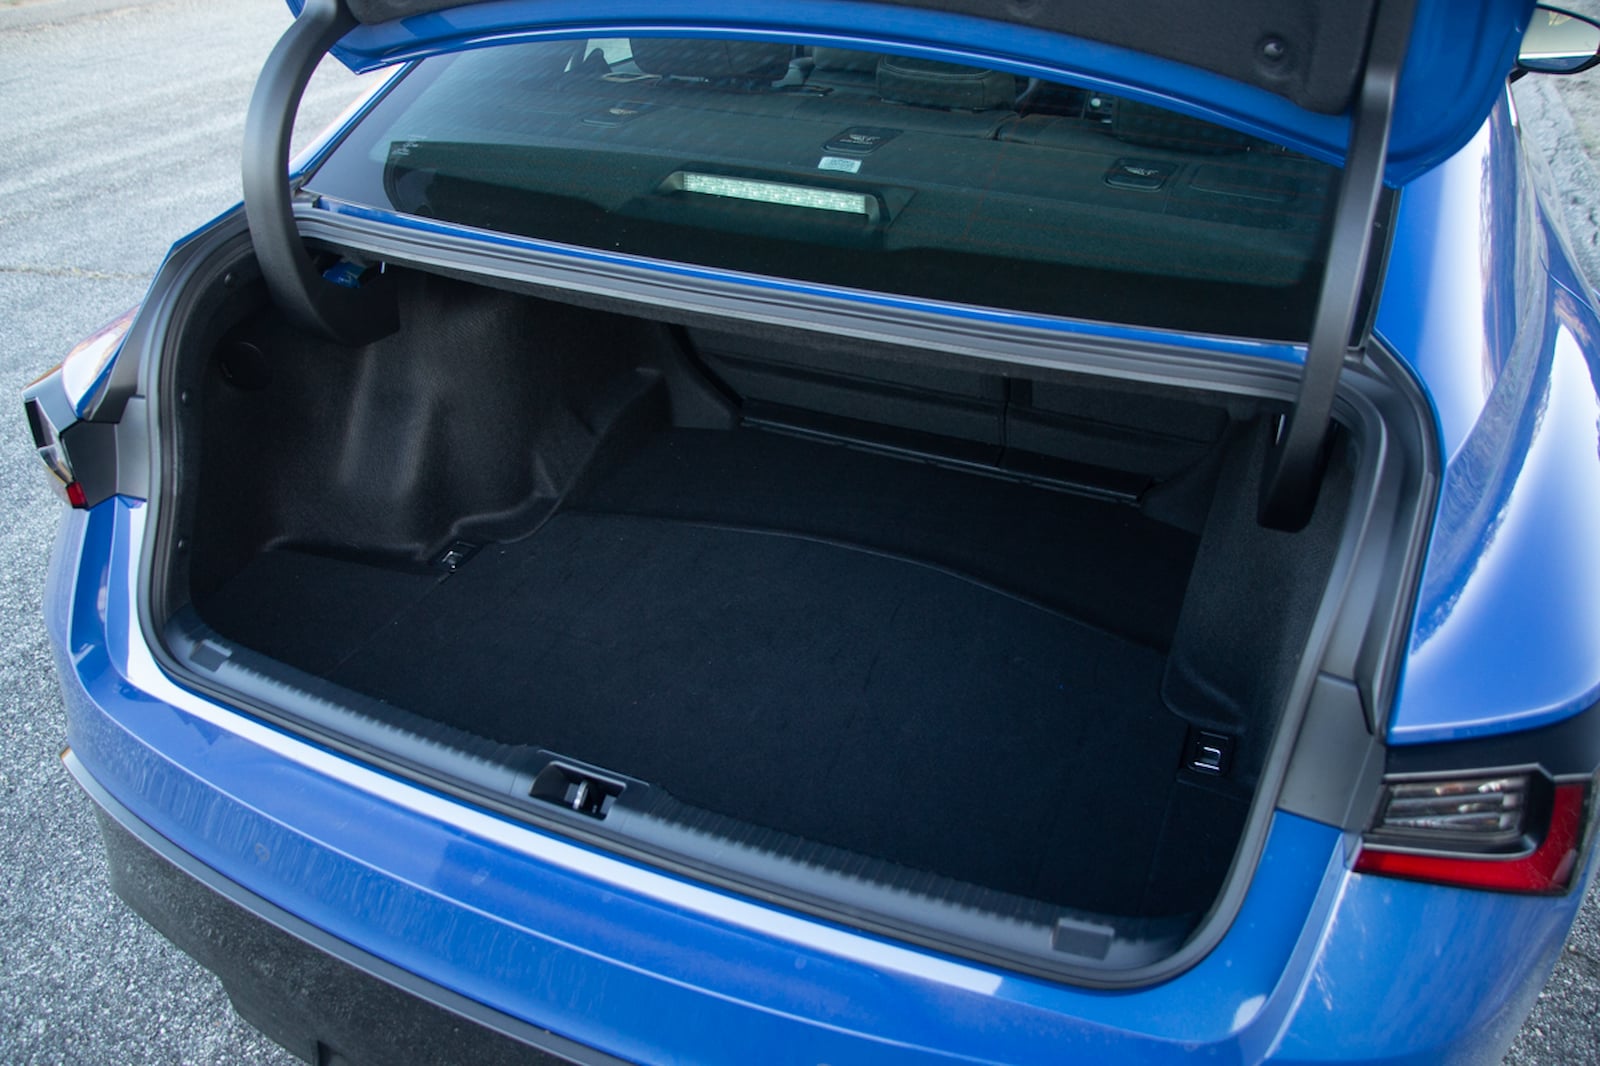 2023 Lexus IS Interior Dimensions: Seating, Cargo Space & Trunk